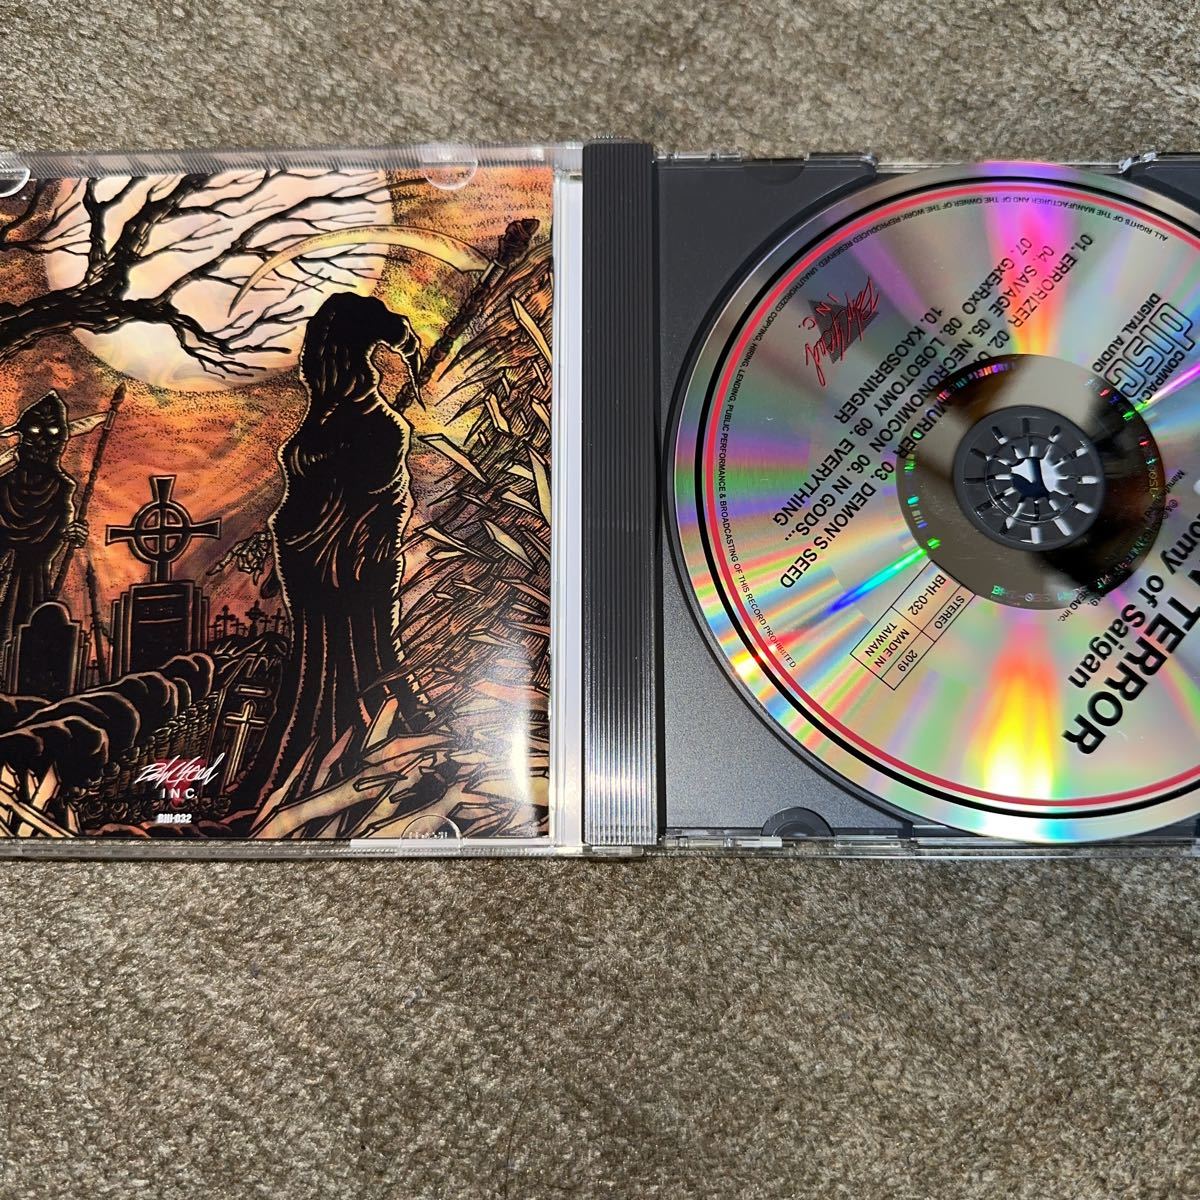 saigan Terror : Anatomy Of Saigan CD 10曲いり サイガン テラー スラッシュ ハードコア(インディーズ